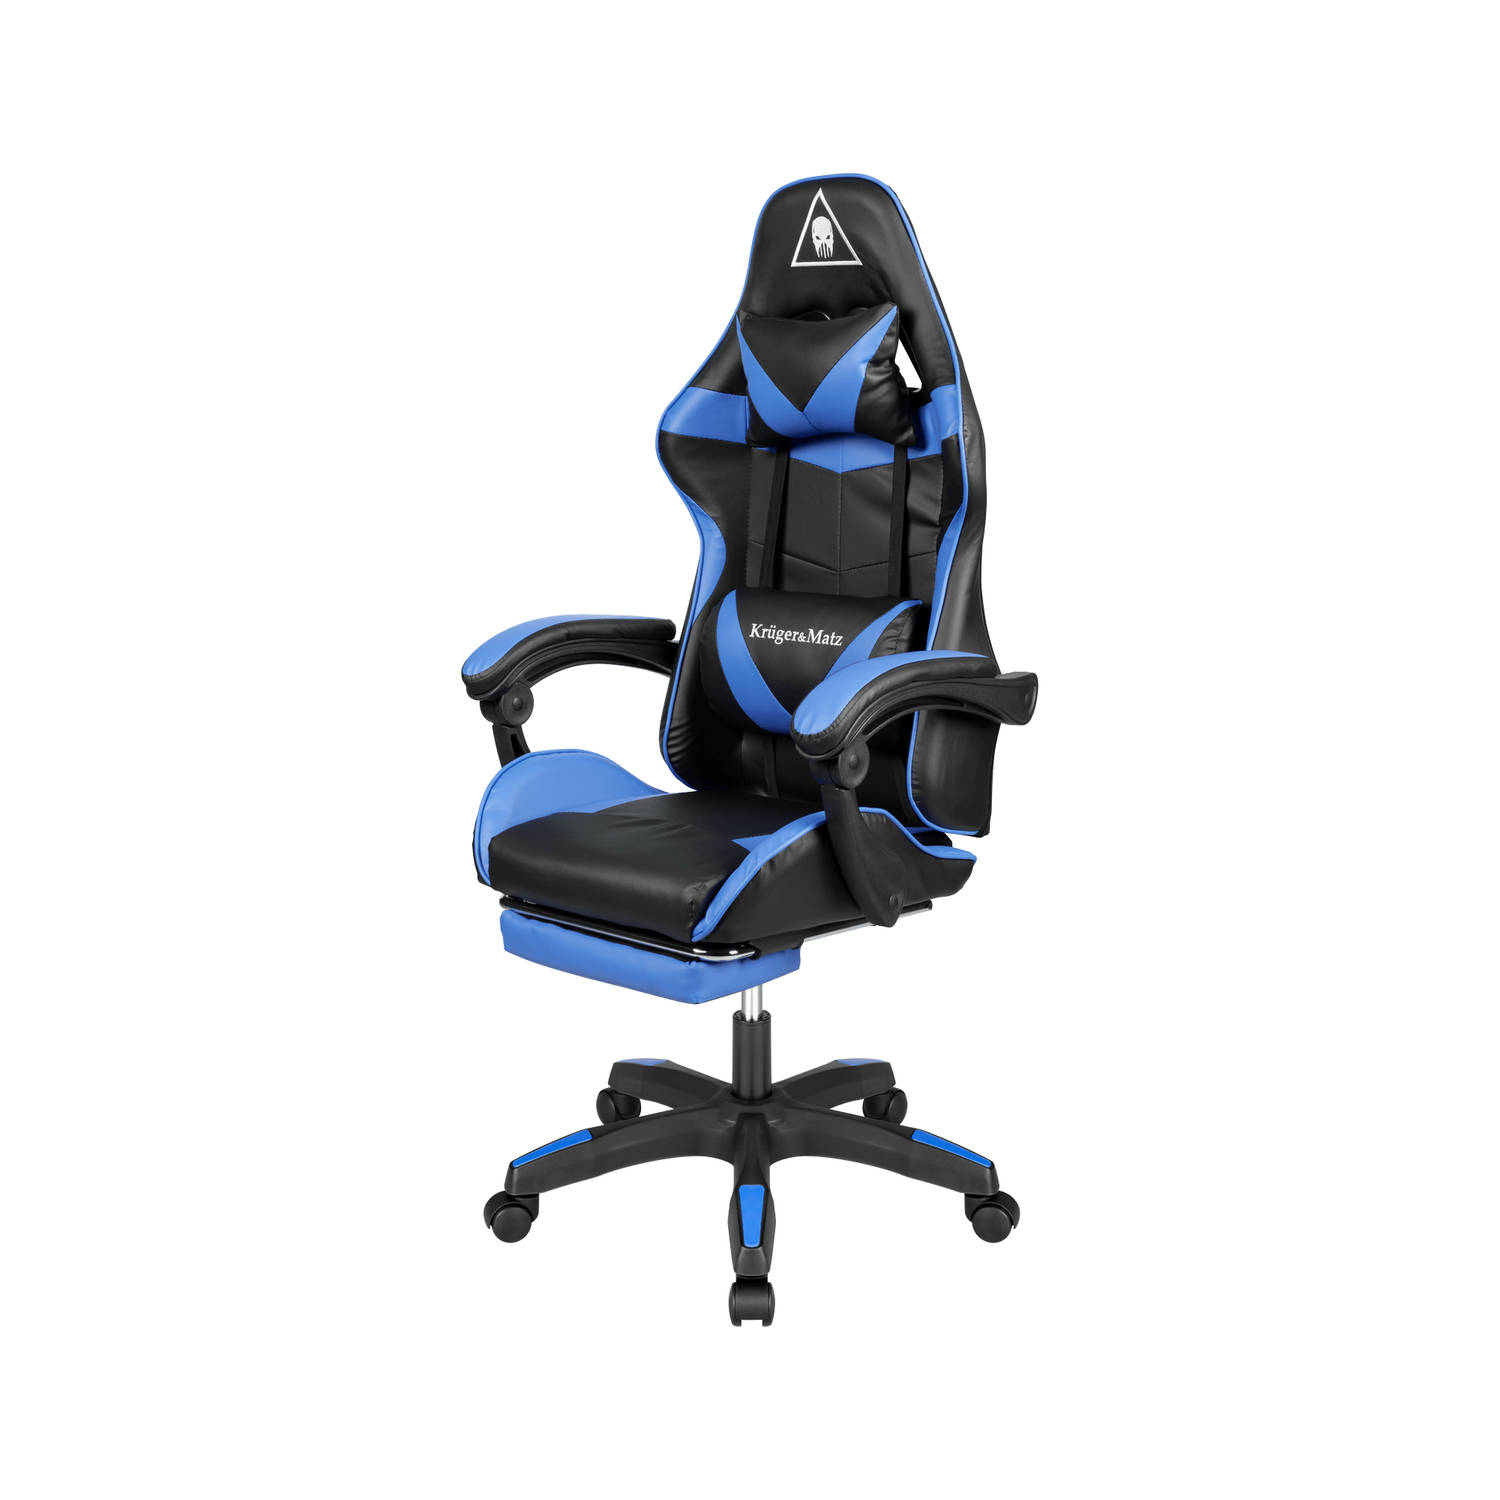 Krüger&Matz KM0790BLU - Warrior GX-150 gaming stoel, blauw-zwart